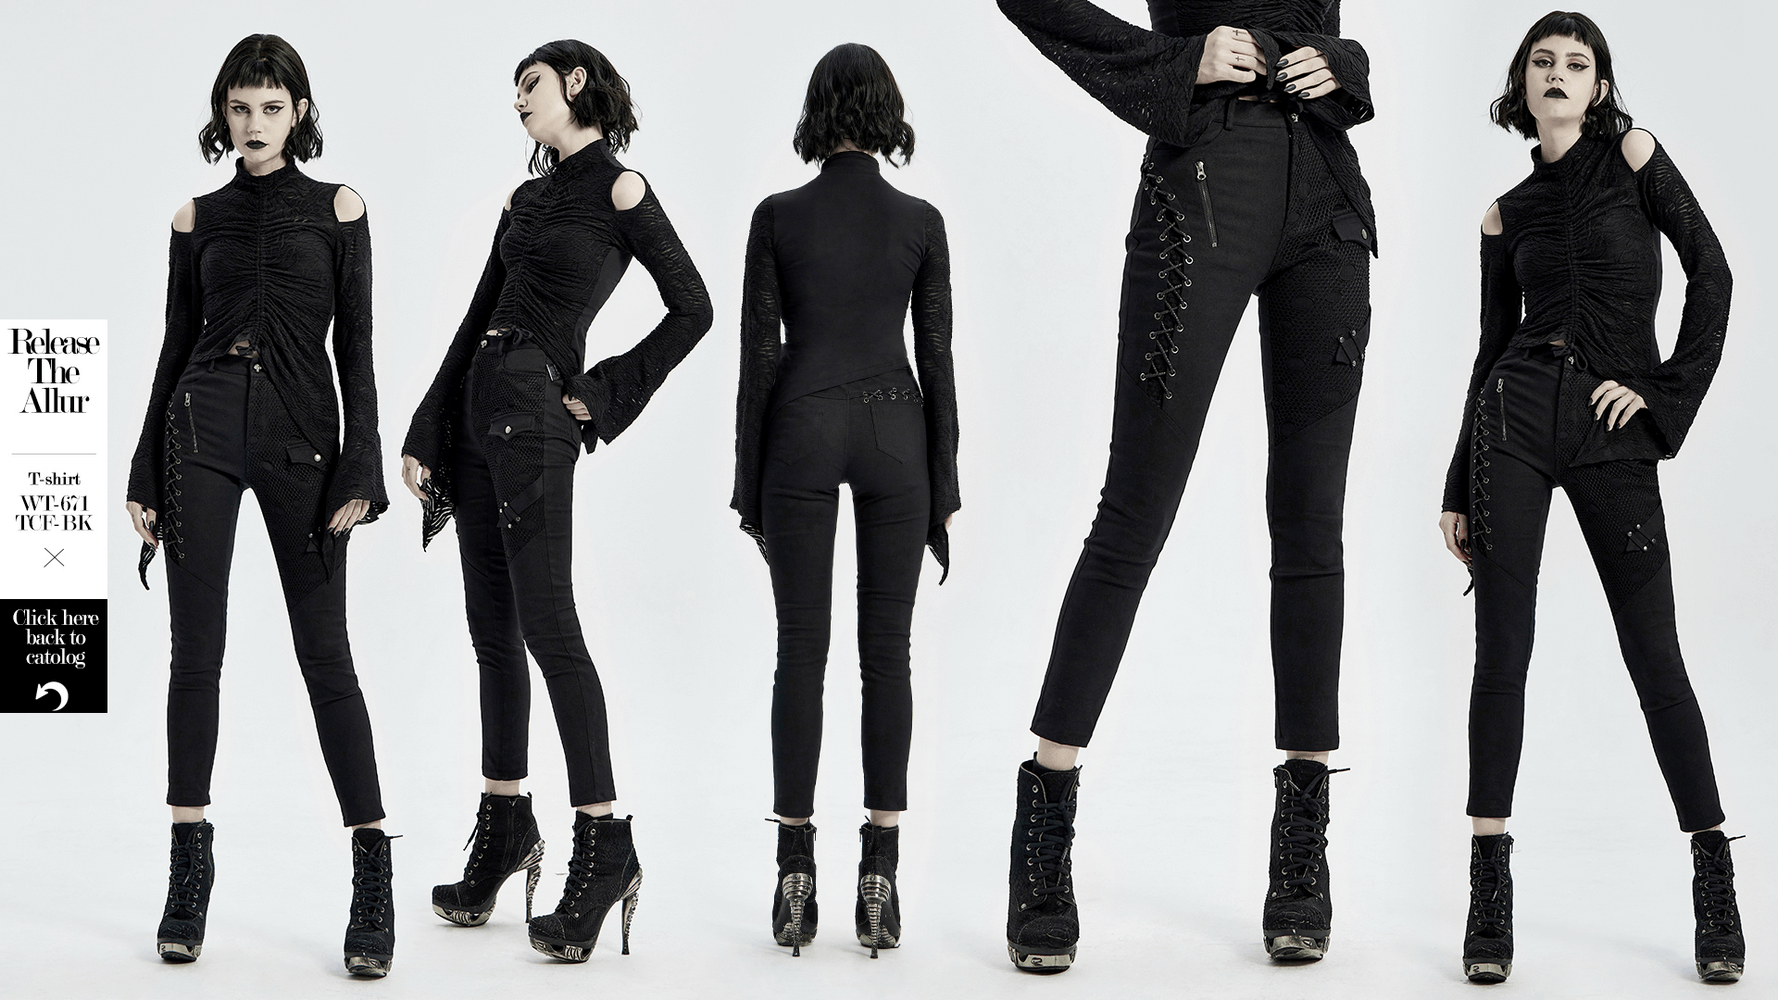 Stylish Gothic Lace-Up Side Detail Skinny Pants